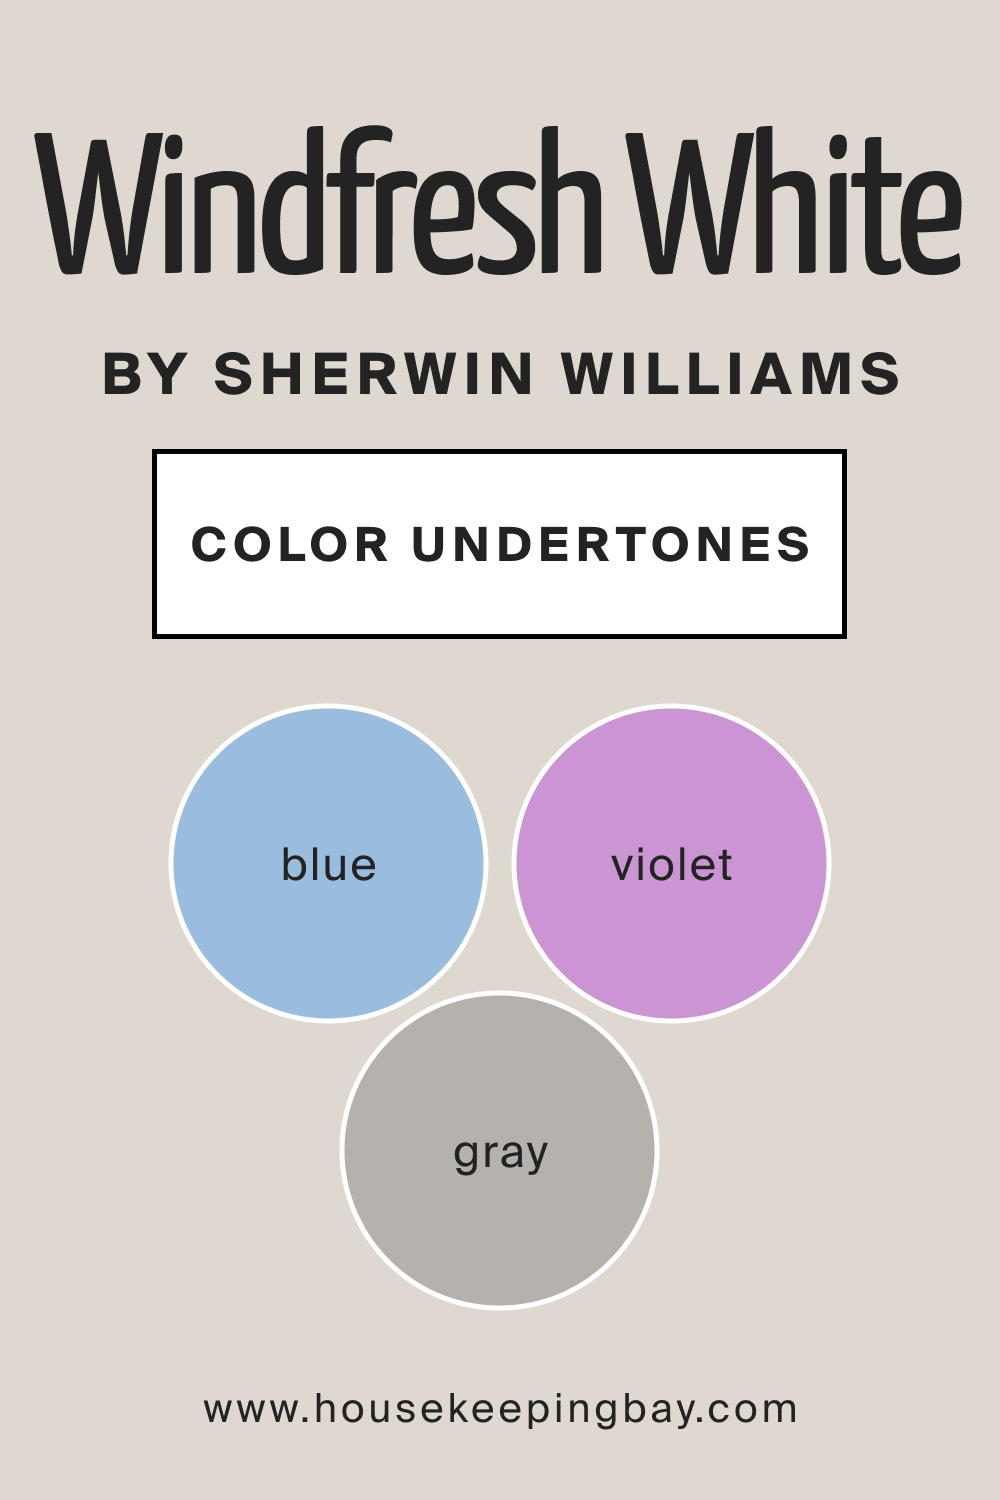 SW Windfresh White by Sherwin Williams Main Color Undertone